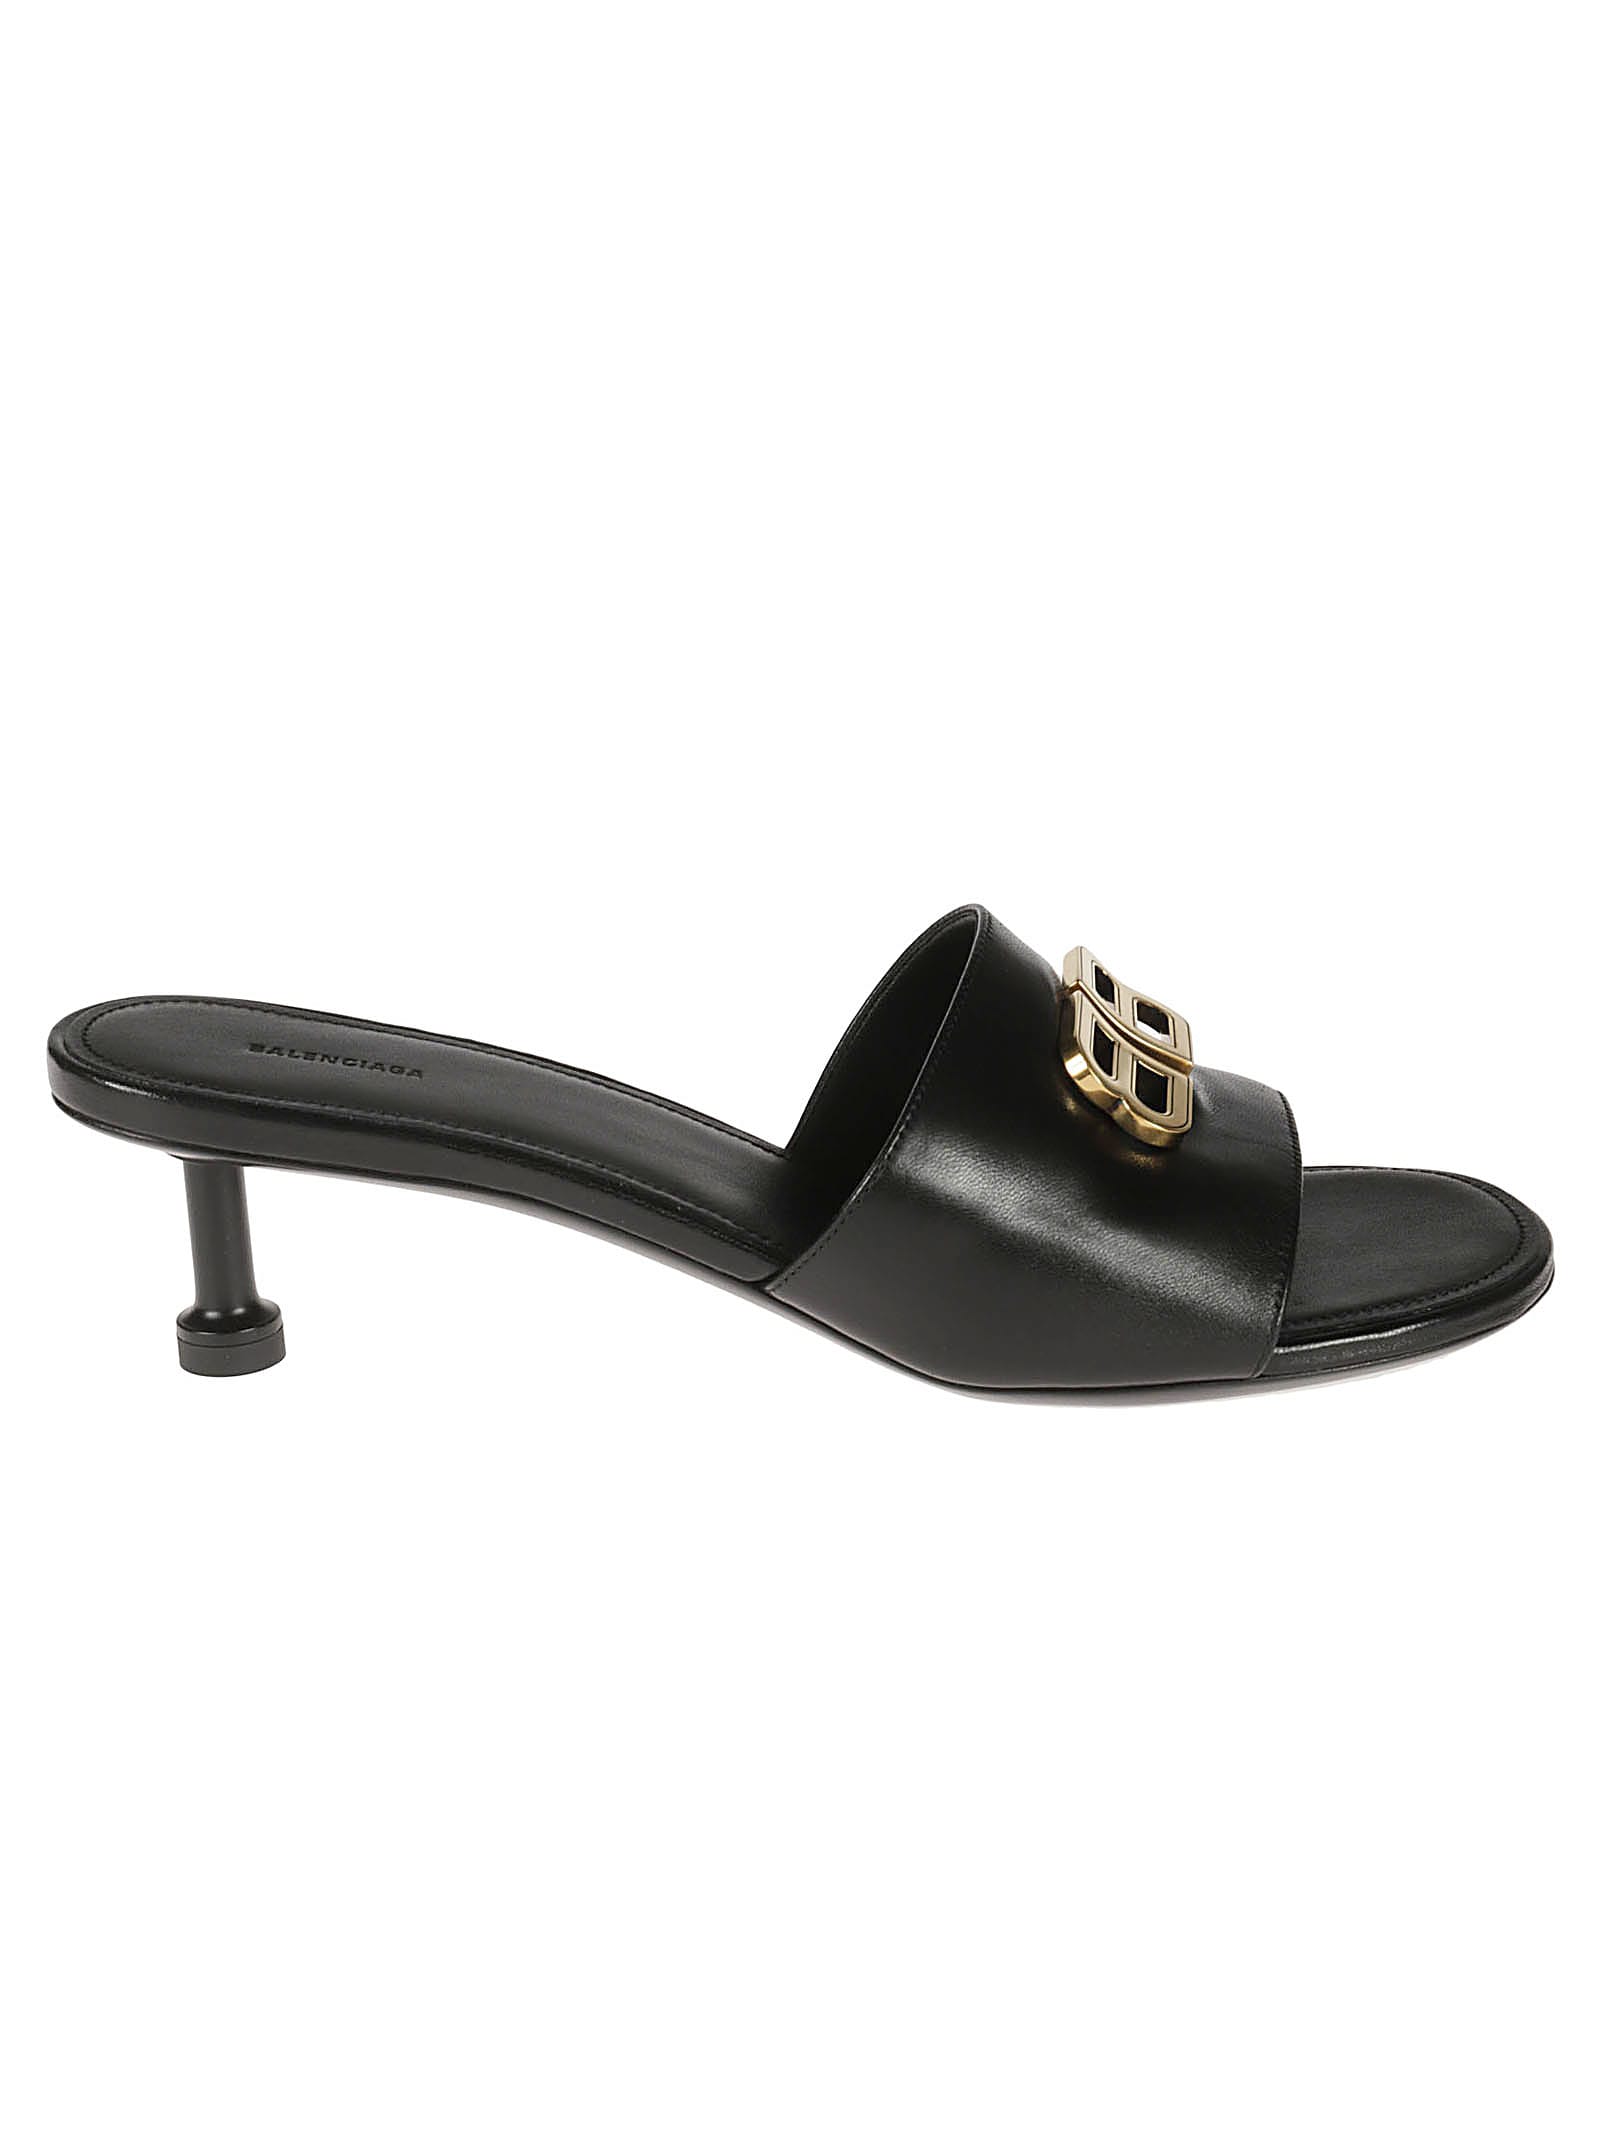 Balenciaga Groupie M50 Sandals